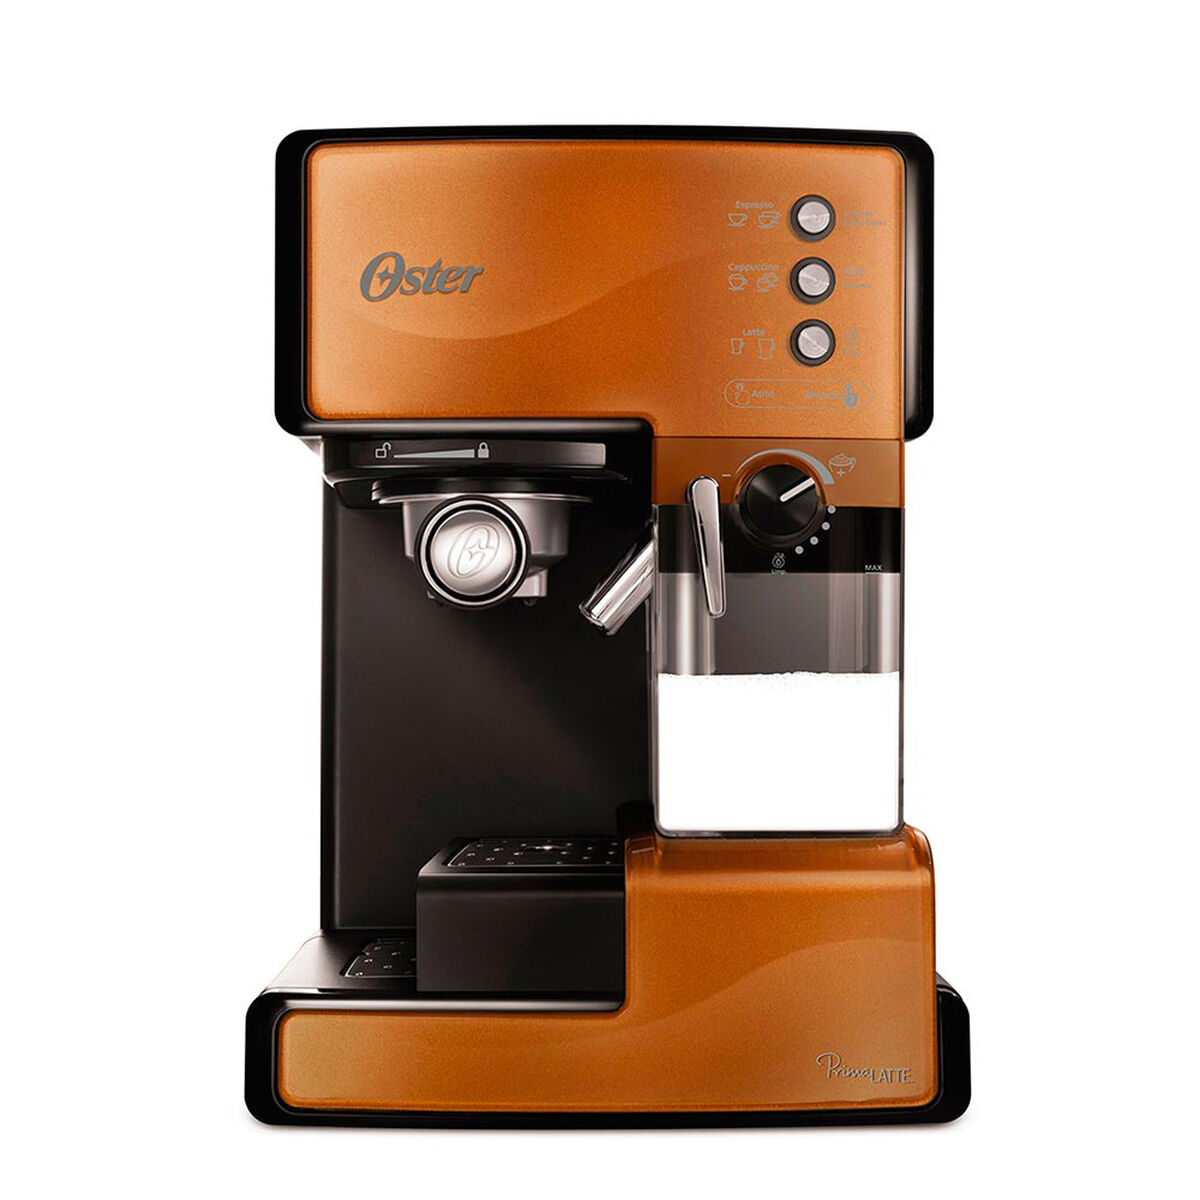 Cafetera Espresso Oster PrimaLatte Cobre 1,2 lts.